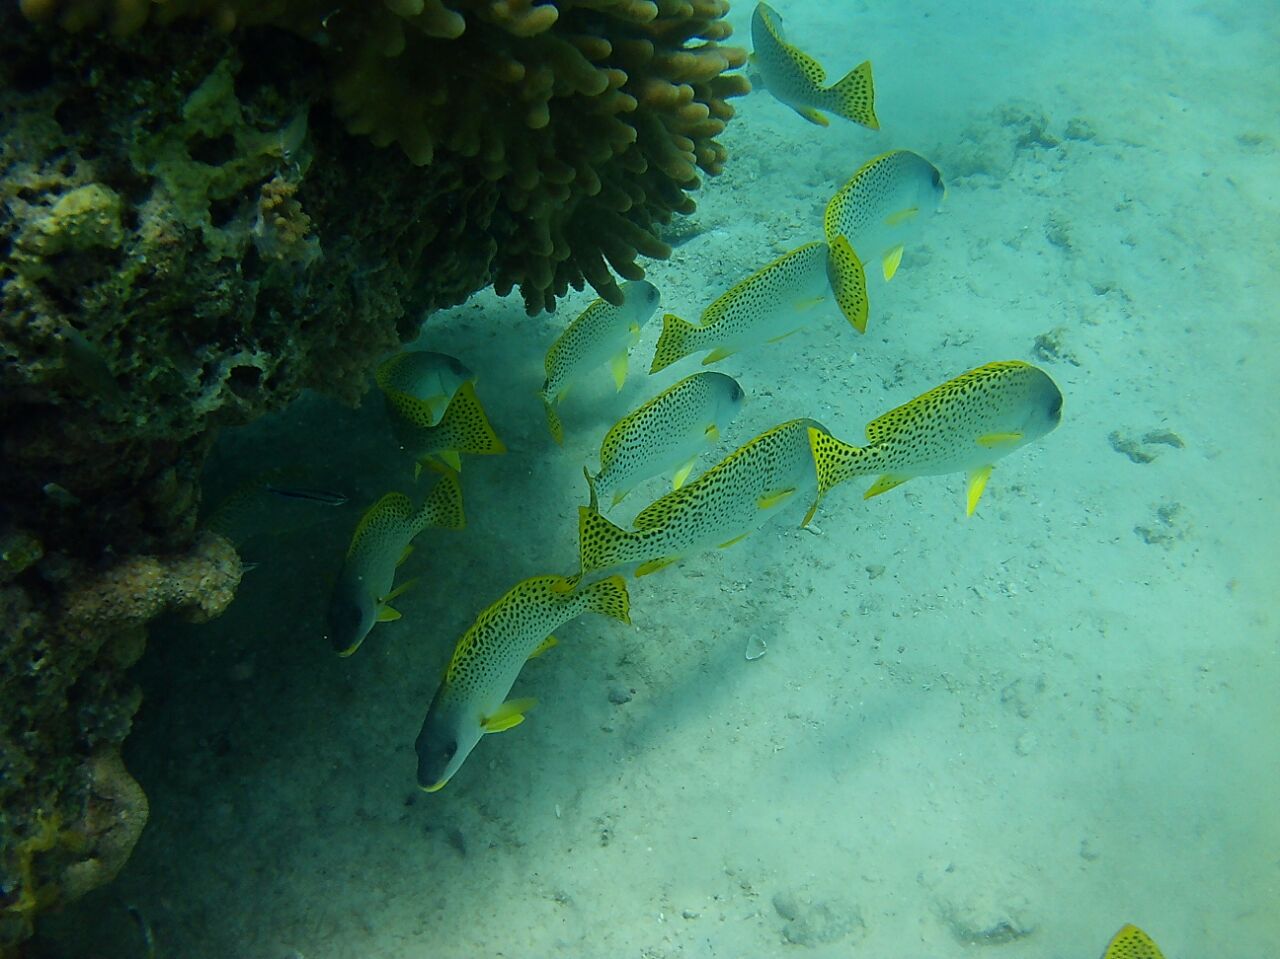 Golden Yellow Shoals of Fish Enjoying their Coral Habitat